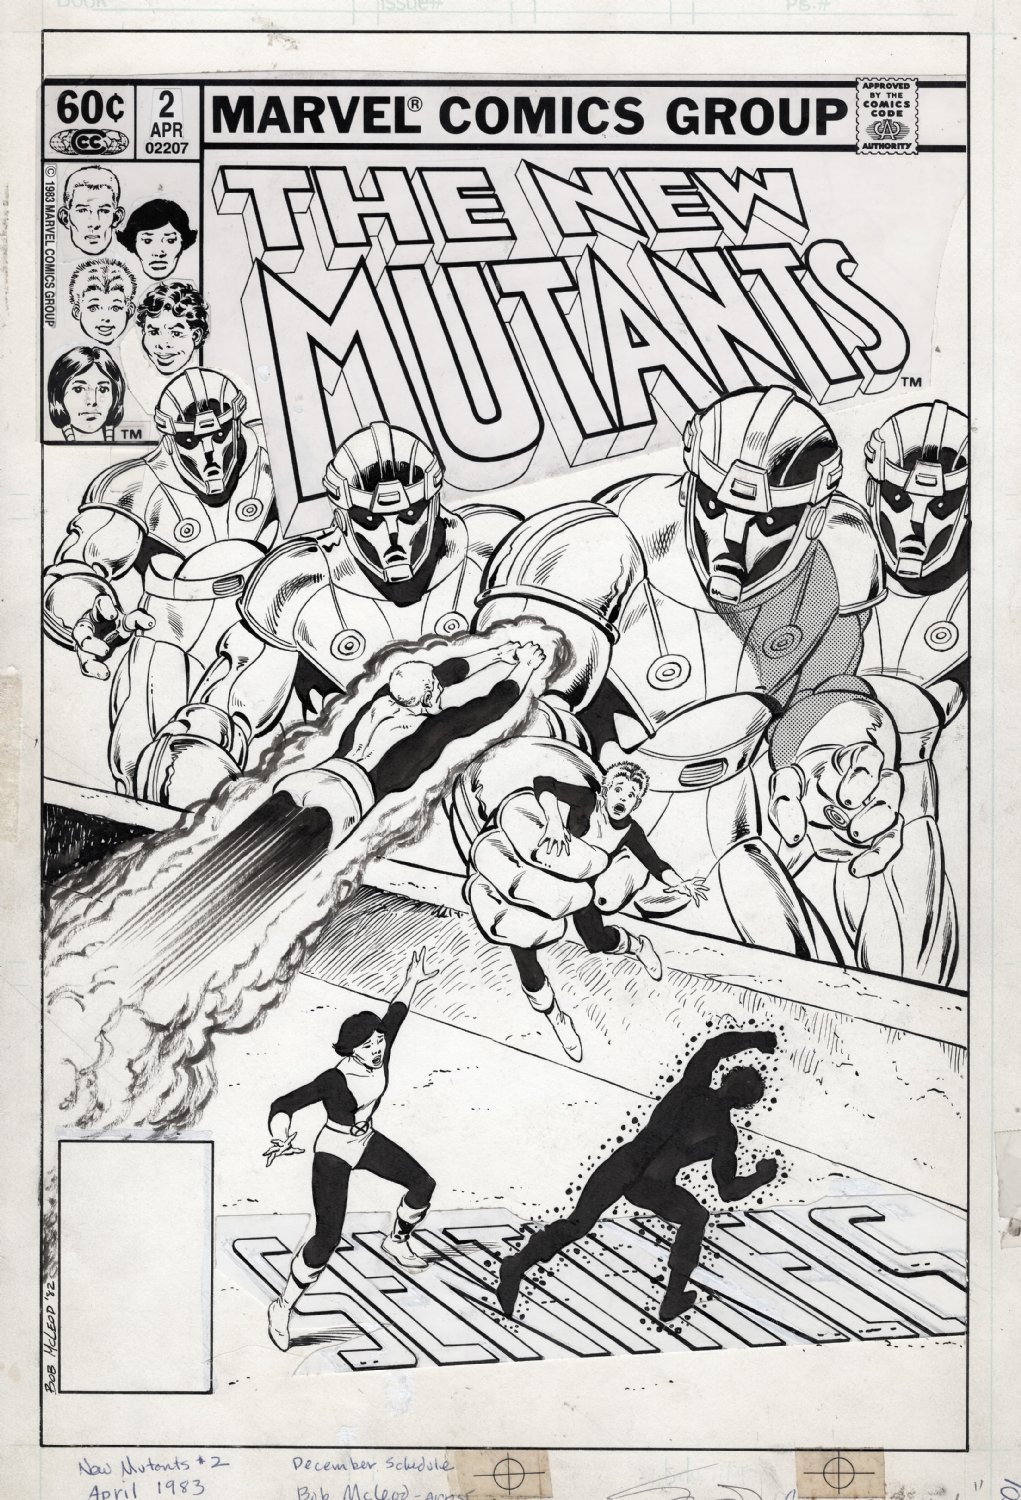 McLEOD, BOB - New Mutants #2 cover, Team shot, 2nd issue 1983, in Stephen  Donnelly's MCLEOD, BOB - New Mutants covers Comic Art Gallery Room